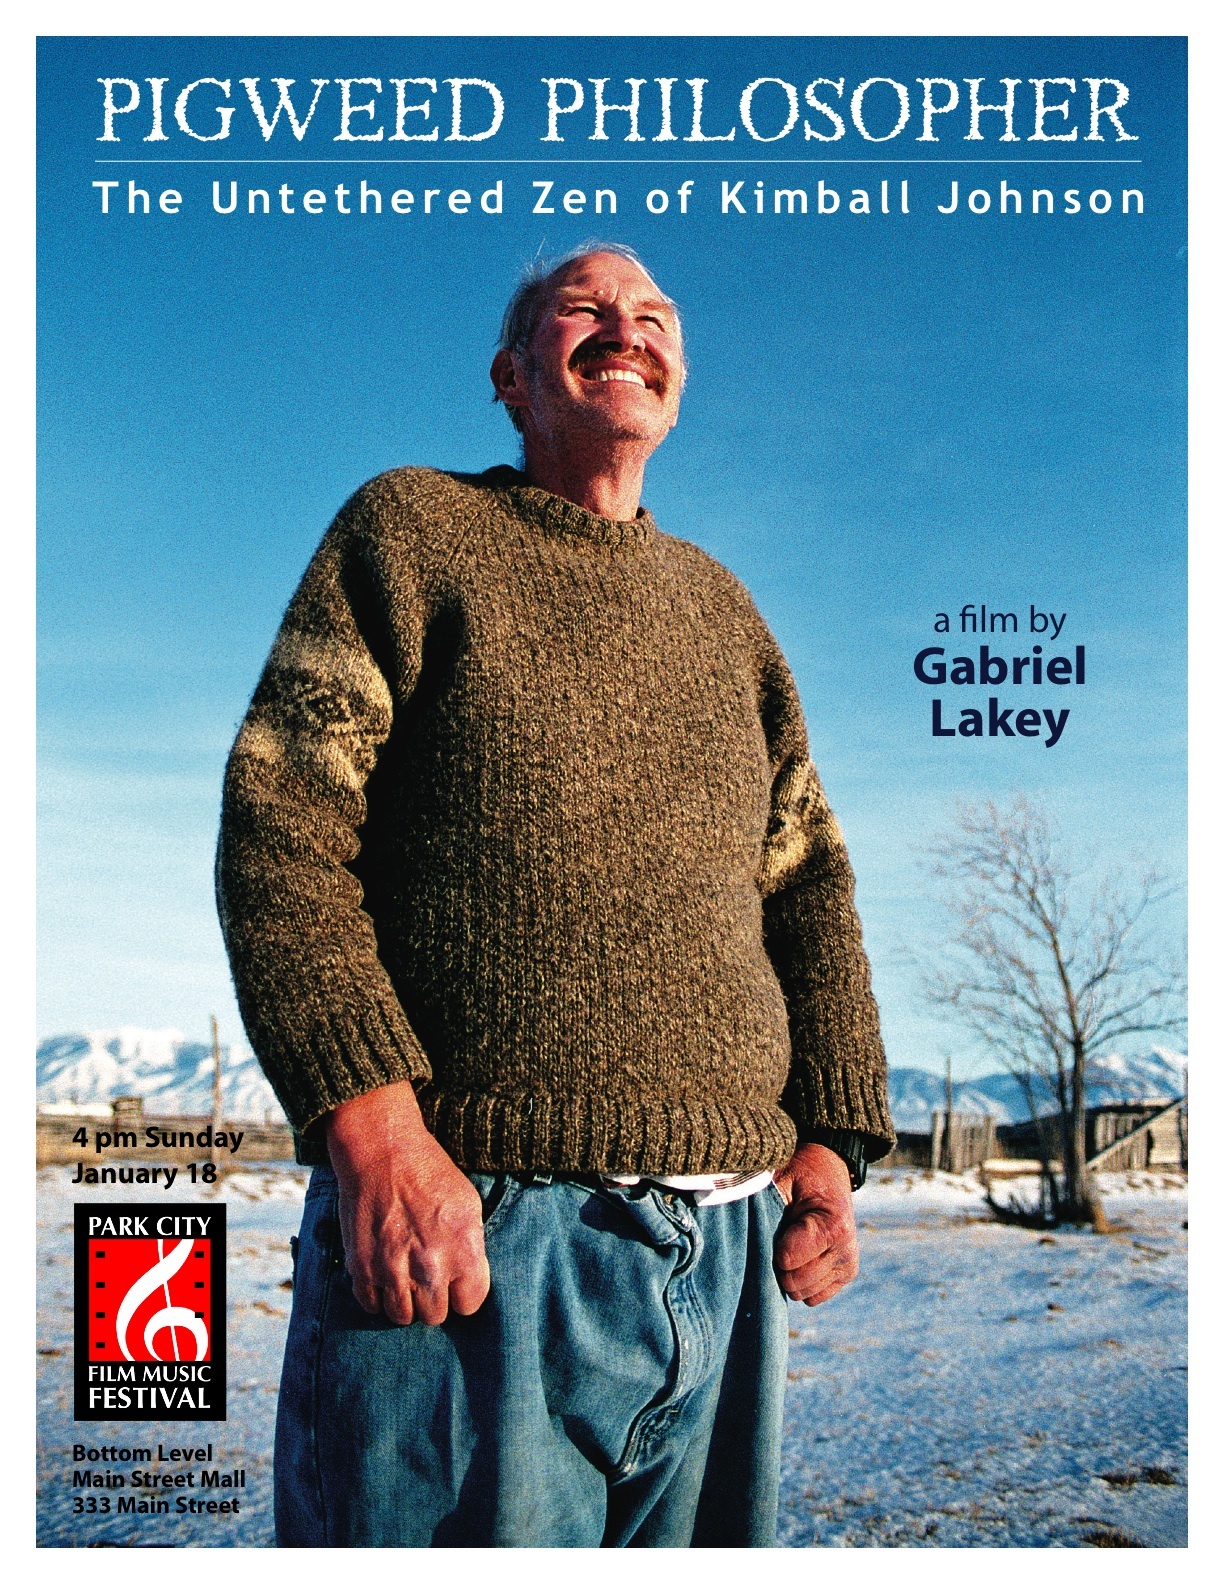 Pigweed Philosopher: The Untethered Zen of Kimball Johnson